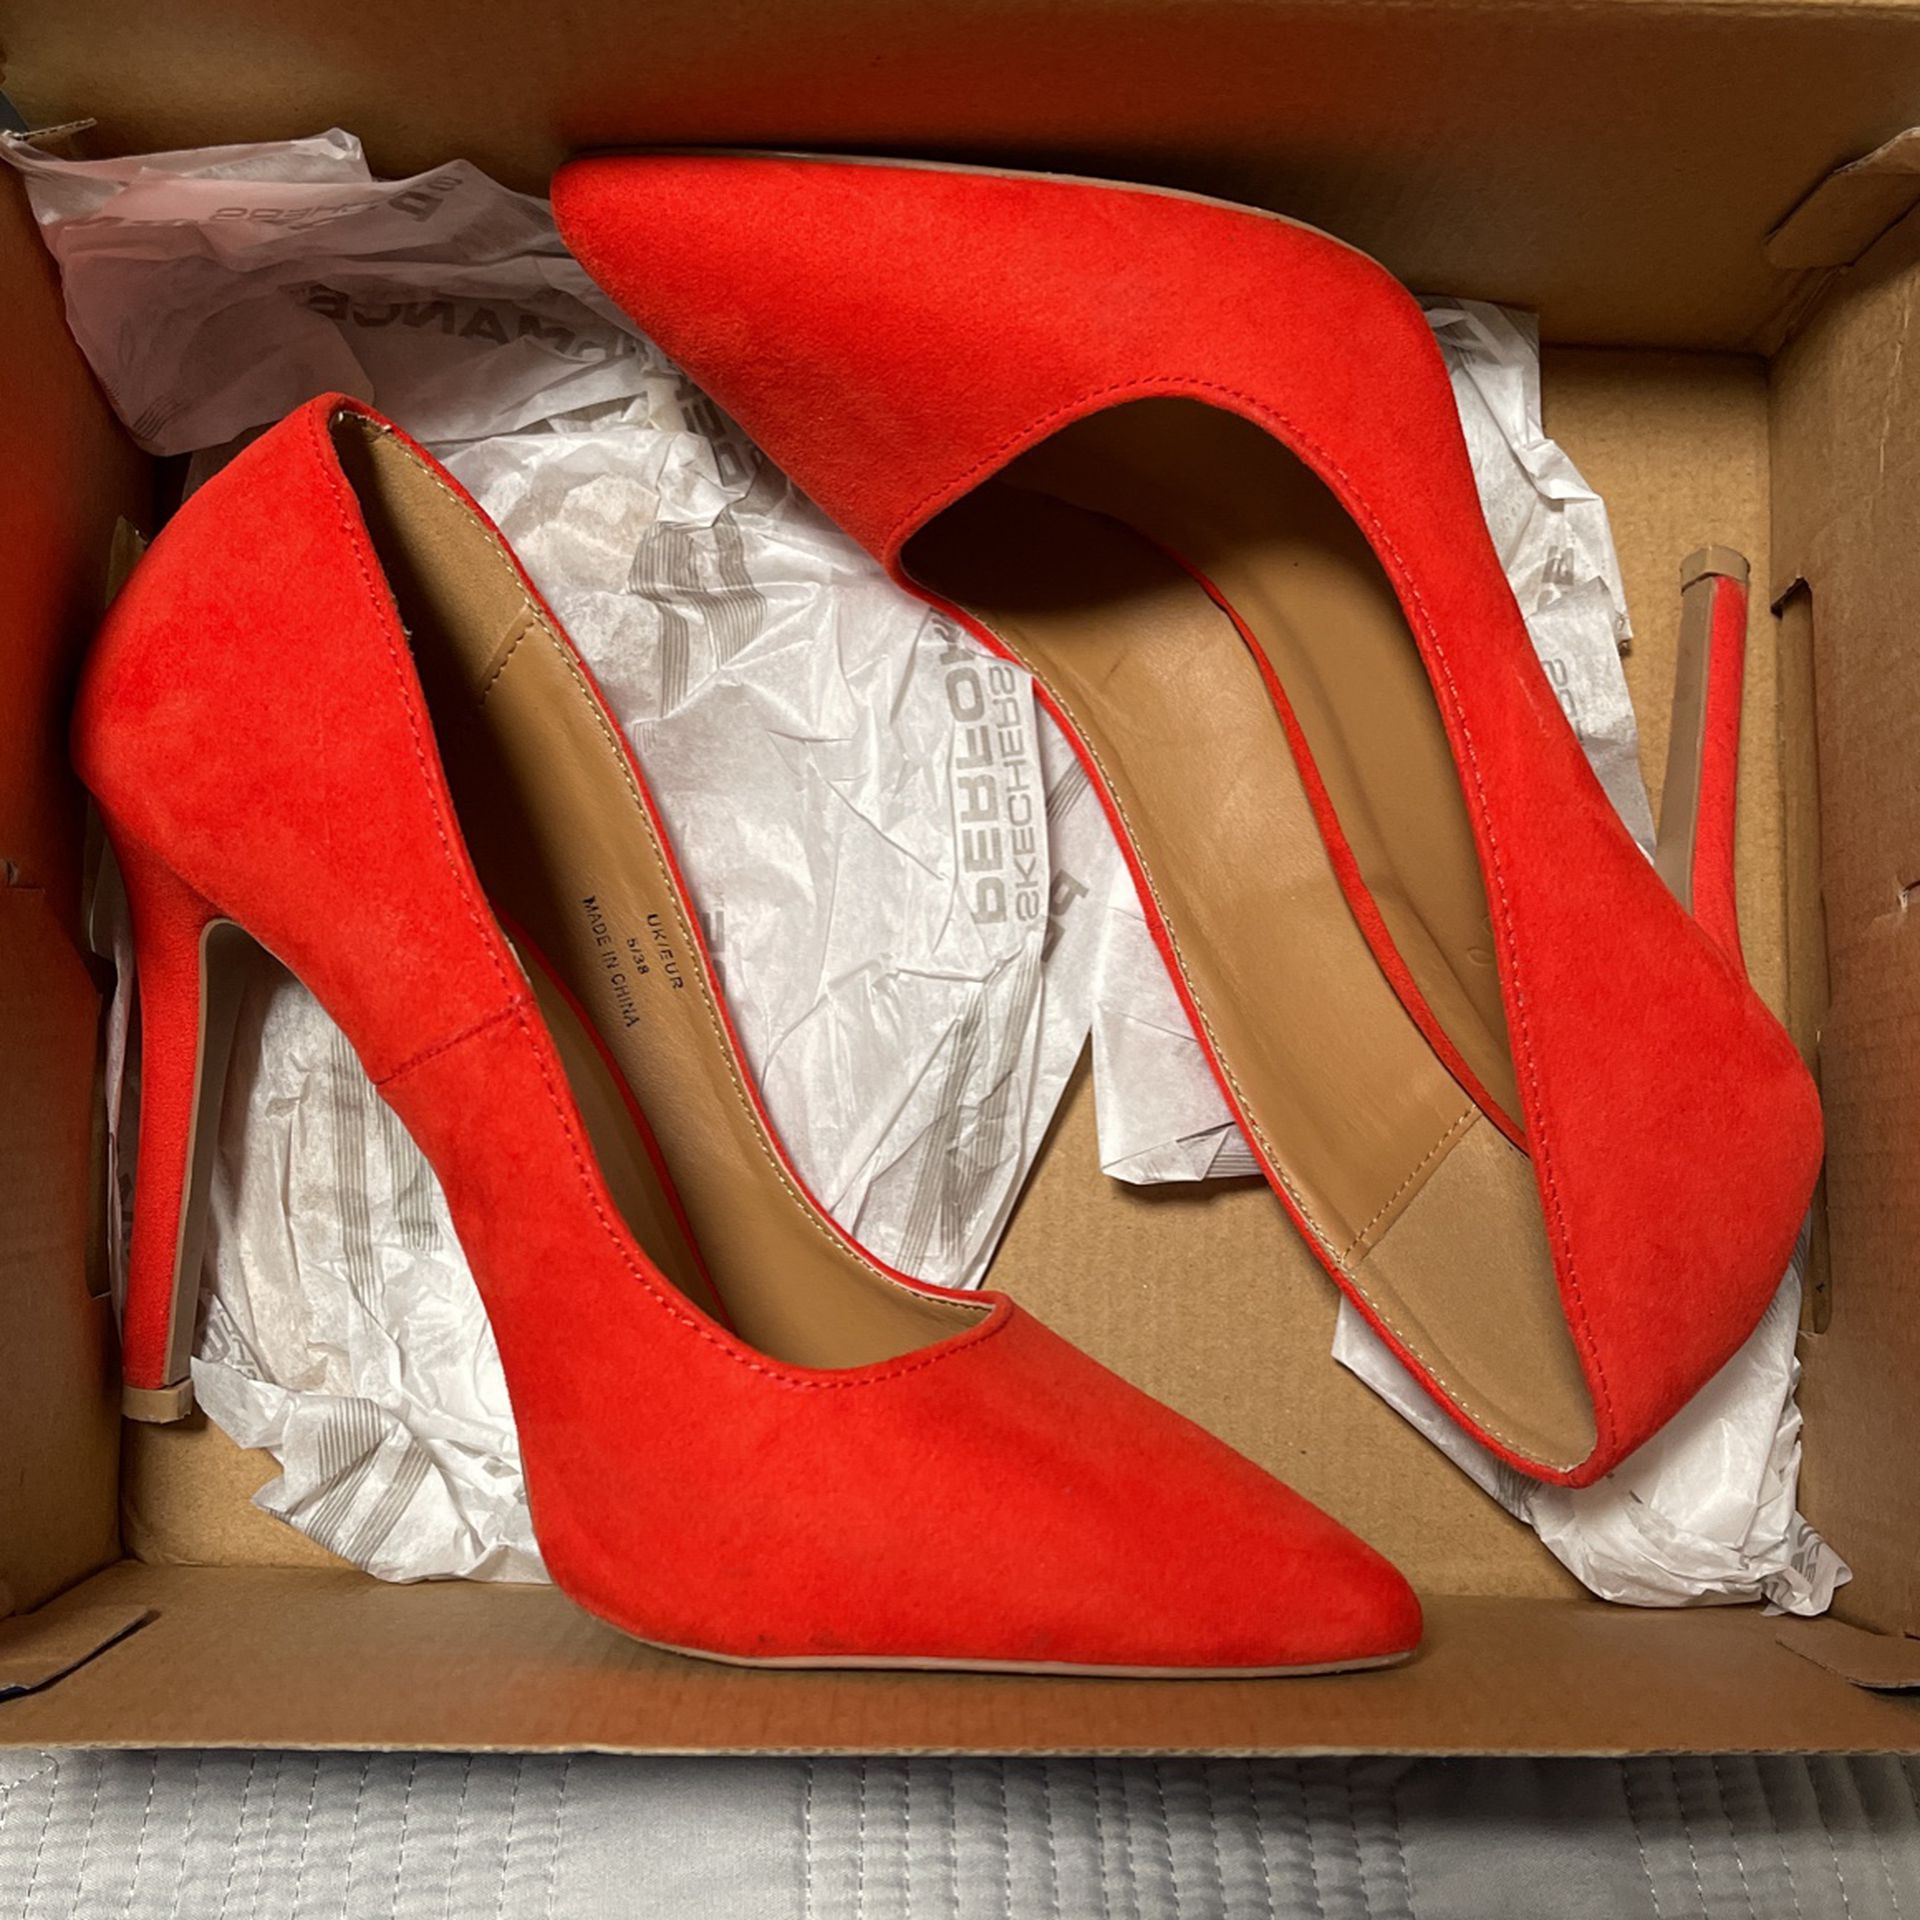 Woman Red Heels